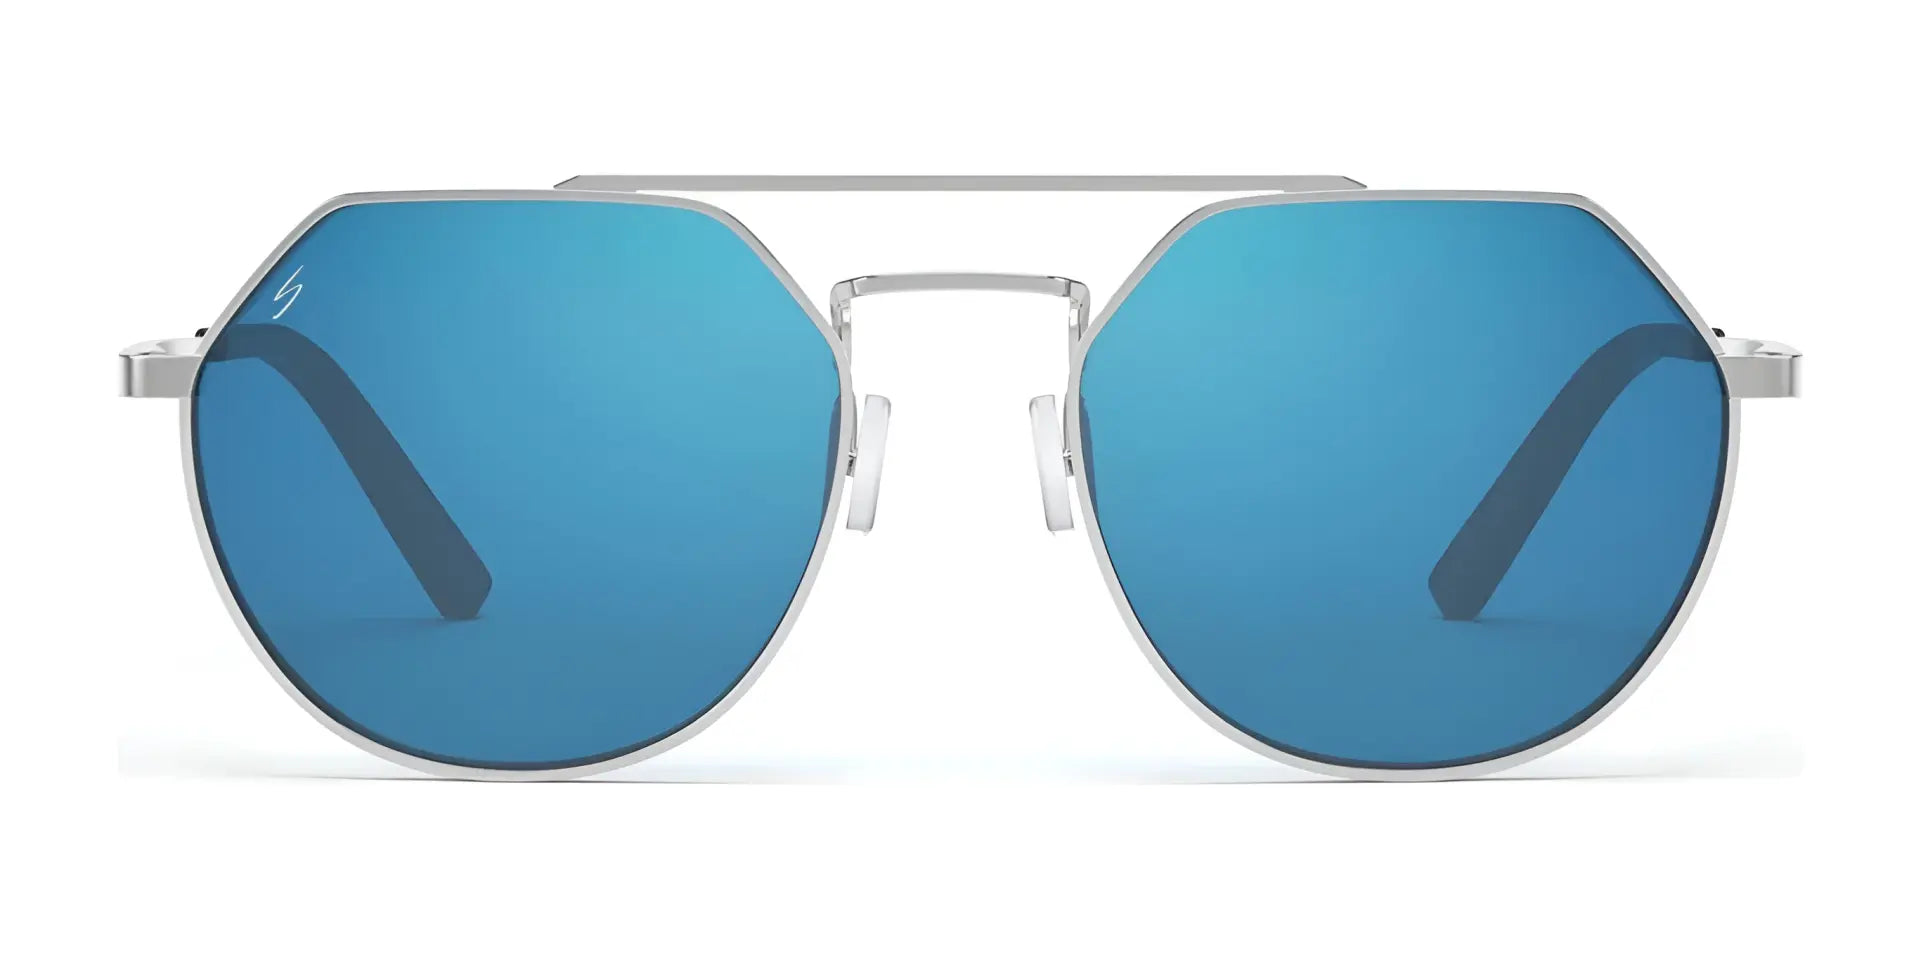 Serengeti SHELBY Sunglasses Shiny Silver / Saturn Polarized 555nm Blue Cat 2 to 3